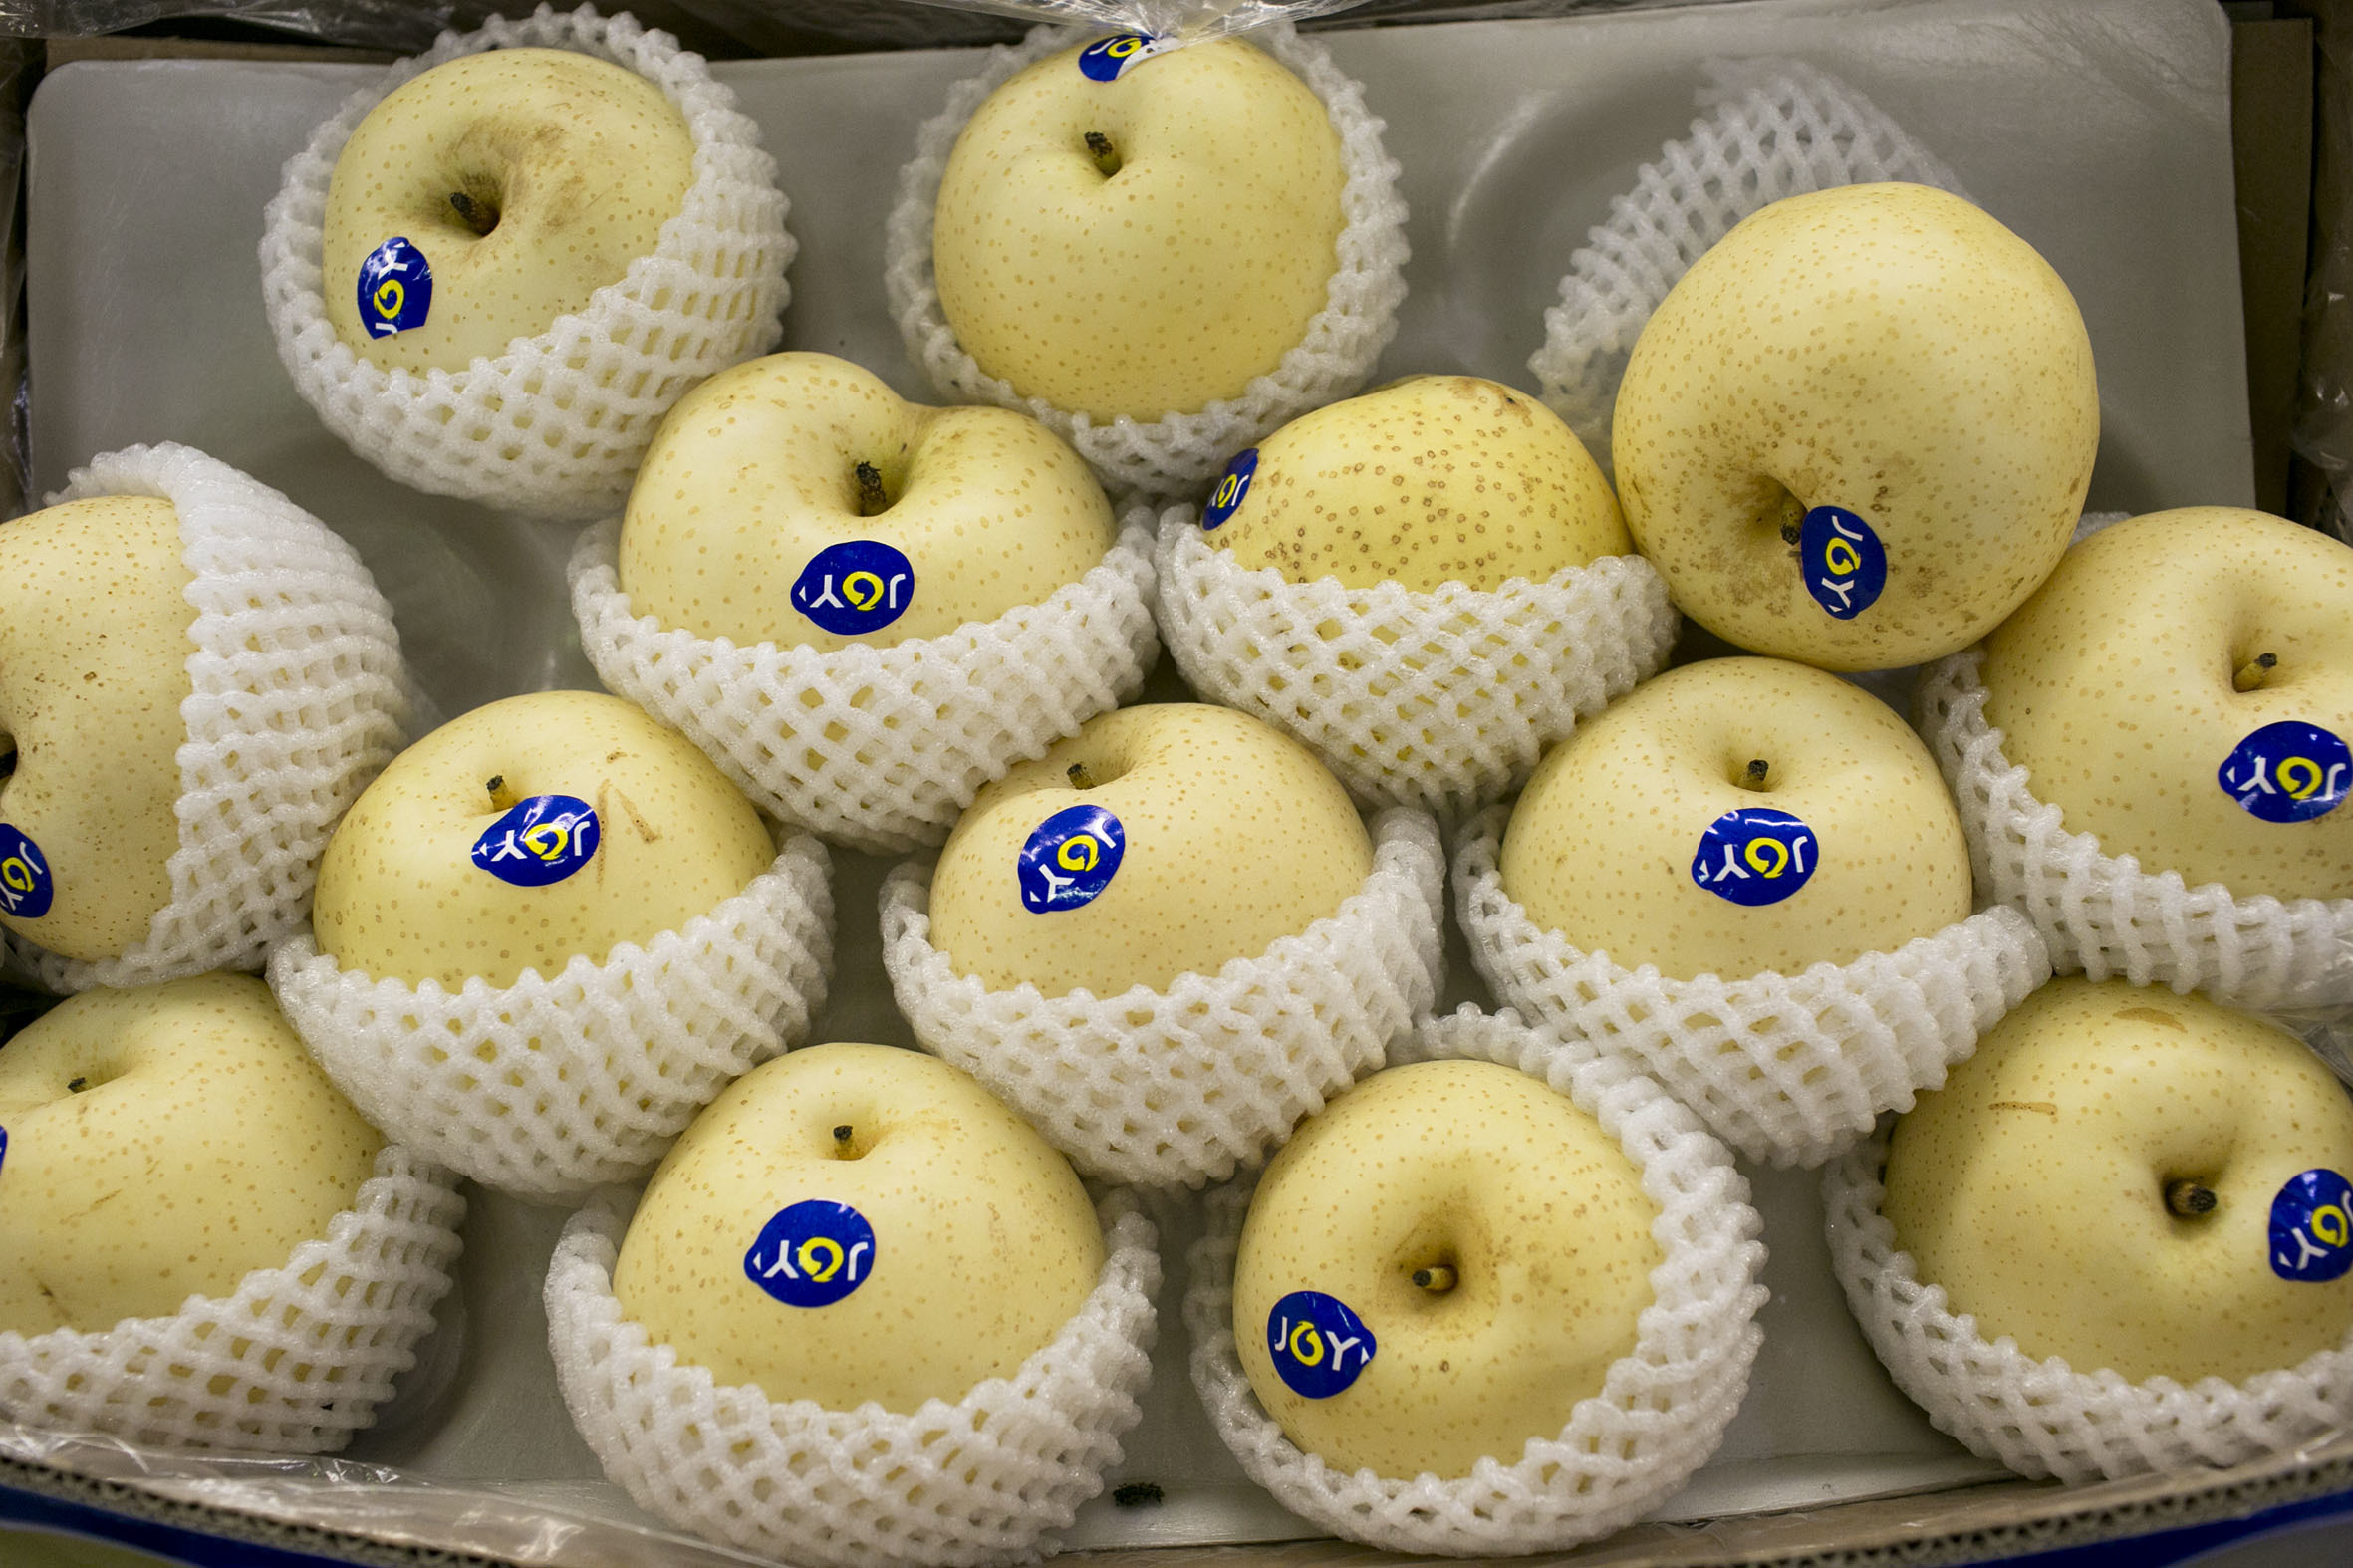 fruit-and-vegetable-market-report-february-2014-asian-pear.jpg?mtime=20170922113359#asset:11341